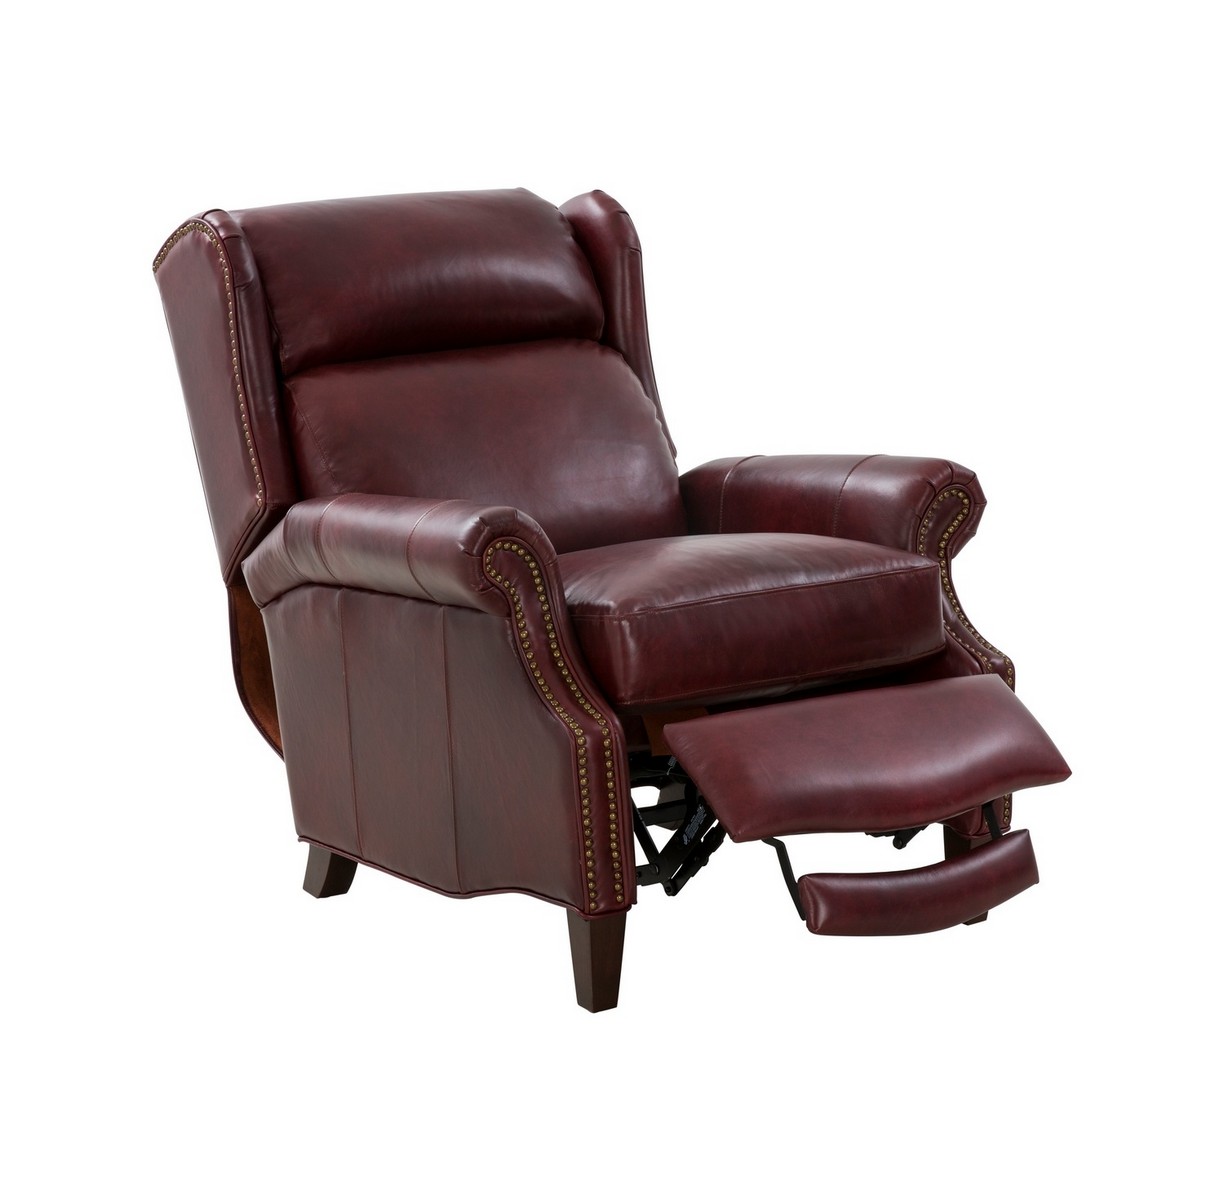 Barcalounger Philadelphia Recliner Chair - Emerson Sangria/Top Grain Leather